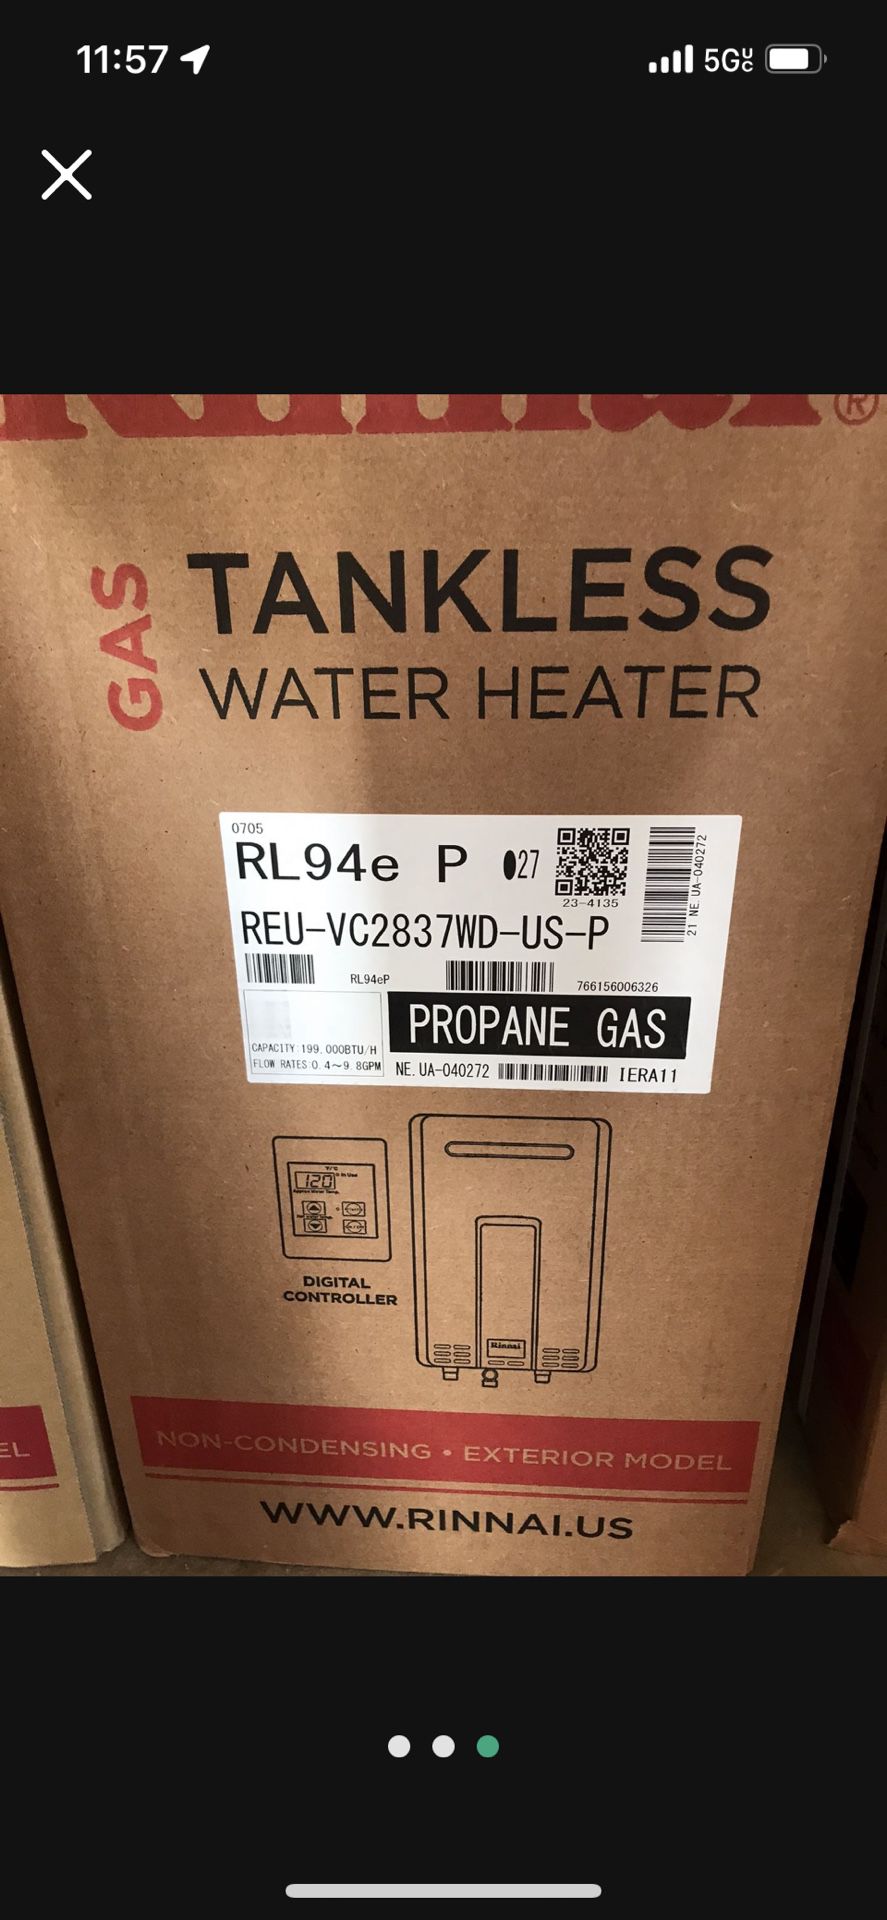 Rinai Tankless Water Heaters